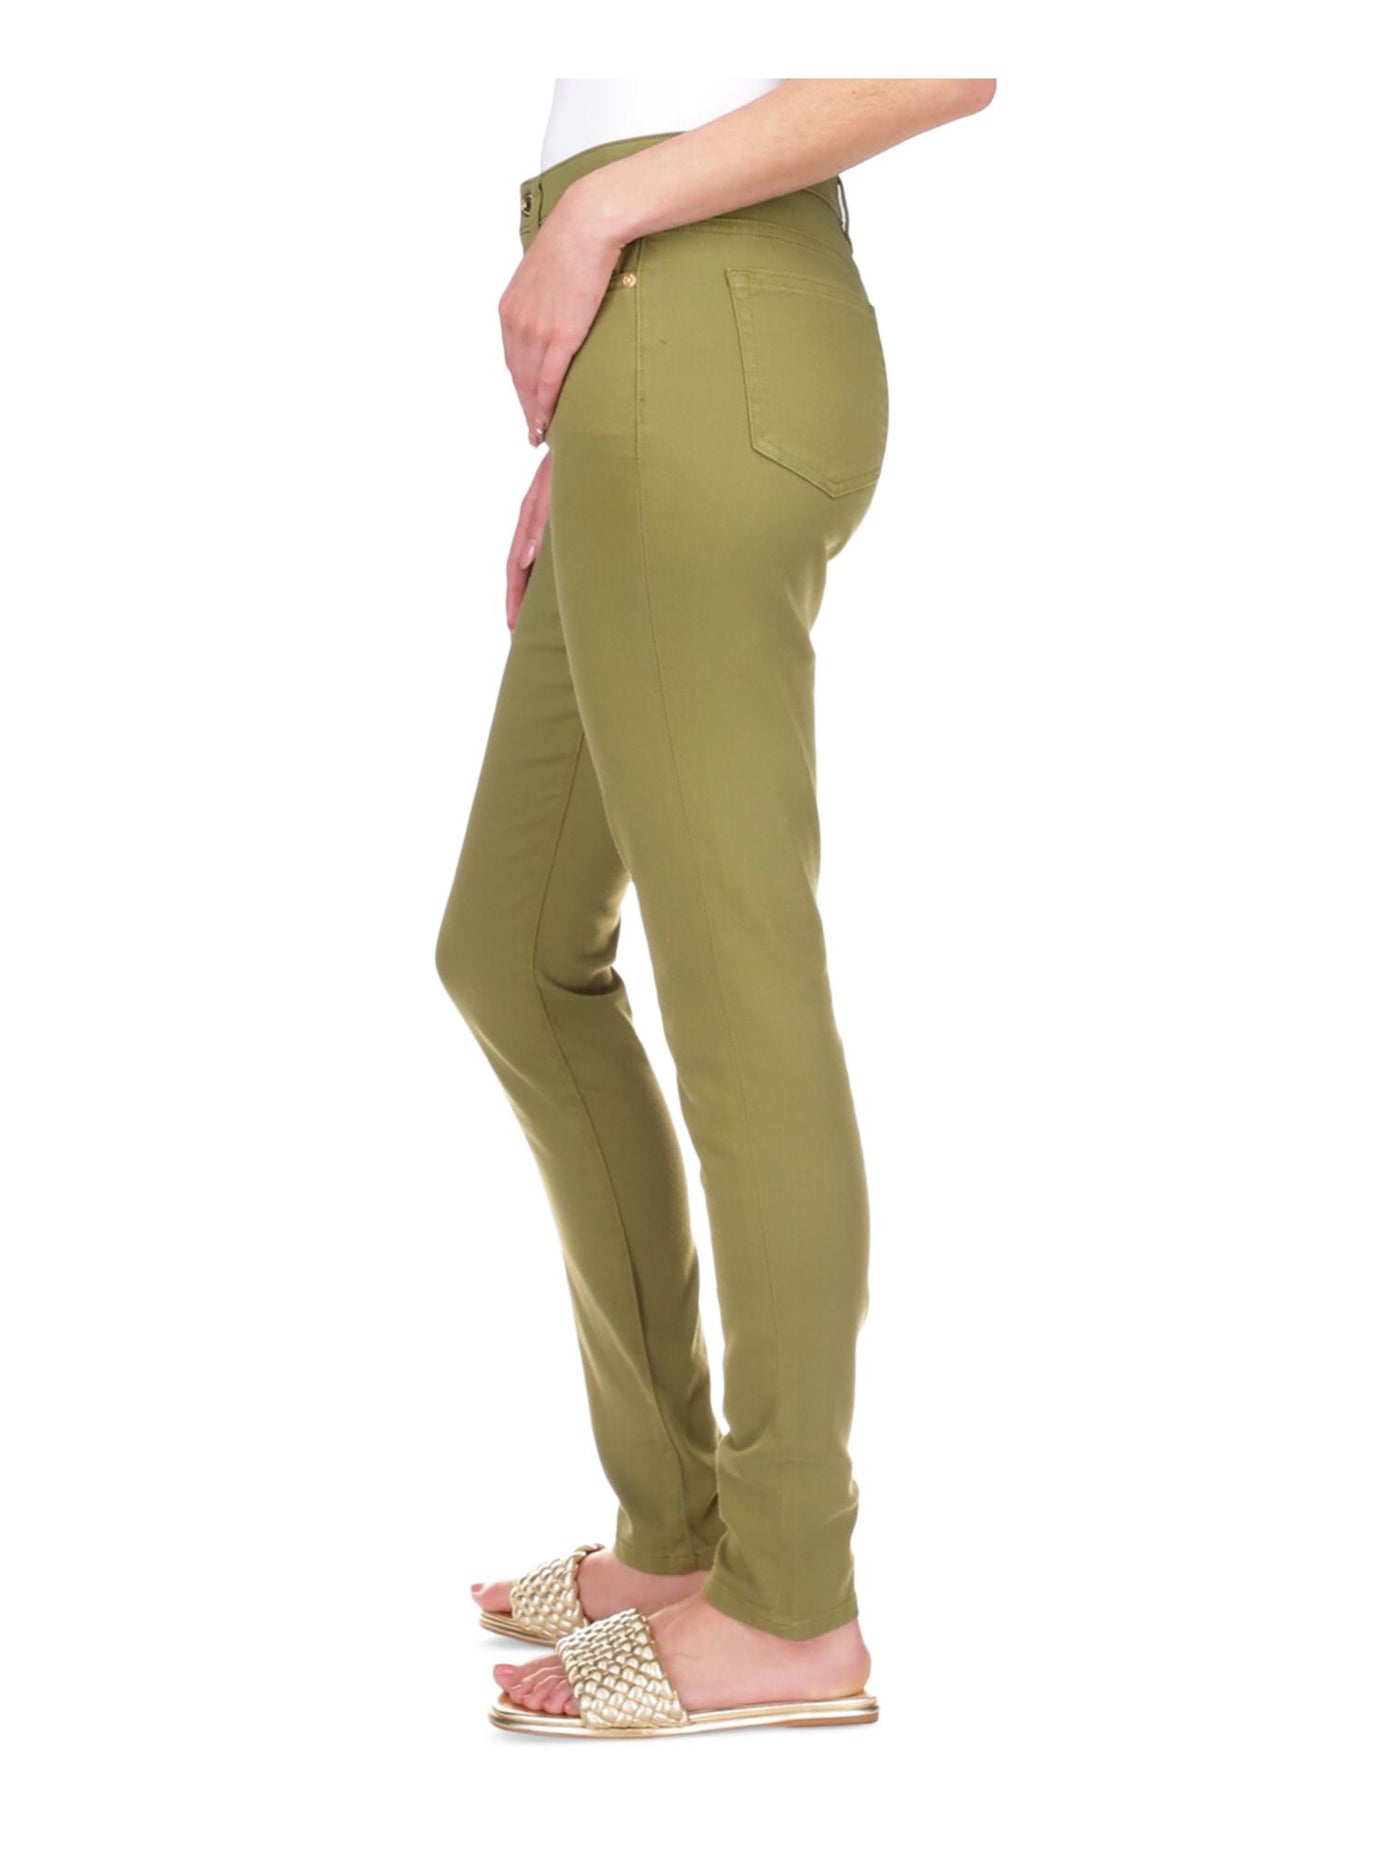 MICHAEL KORS Womens Green Zippered Pocketed Skinny Leg High Waist Jeans Petites 8P